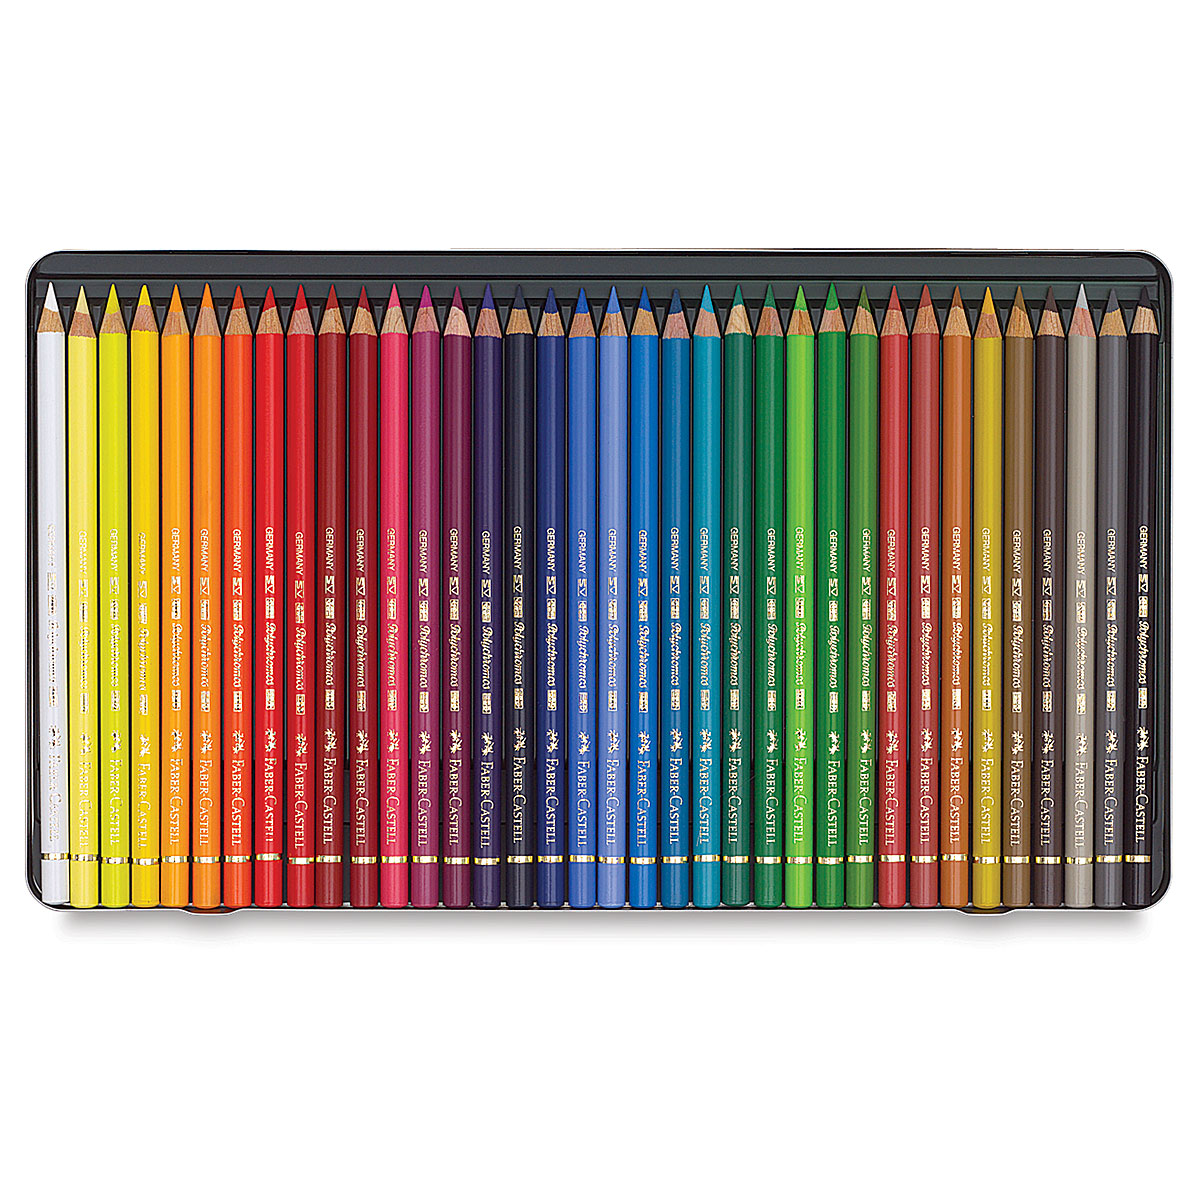 Faber-Castell Polychromos Pencil Set - Assorted Colors, Tin Box, Set of 36